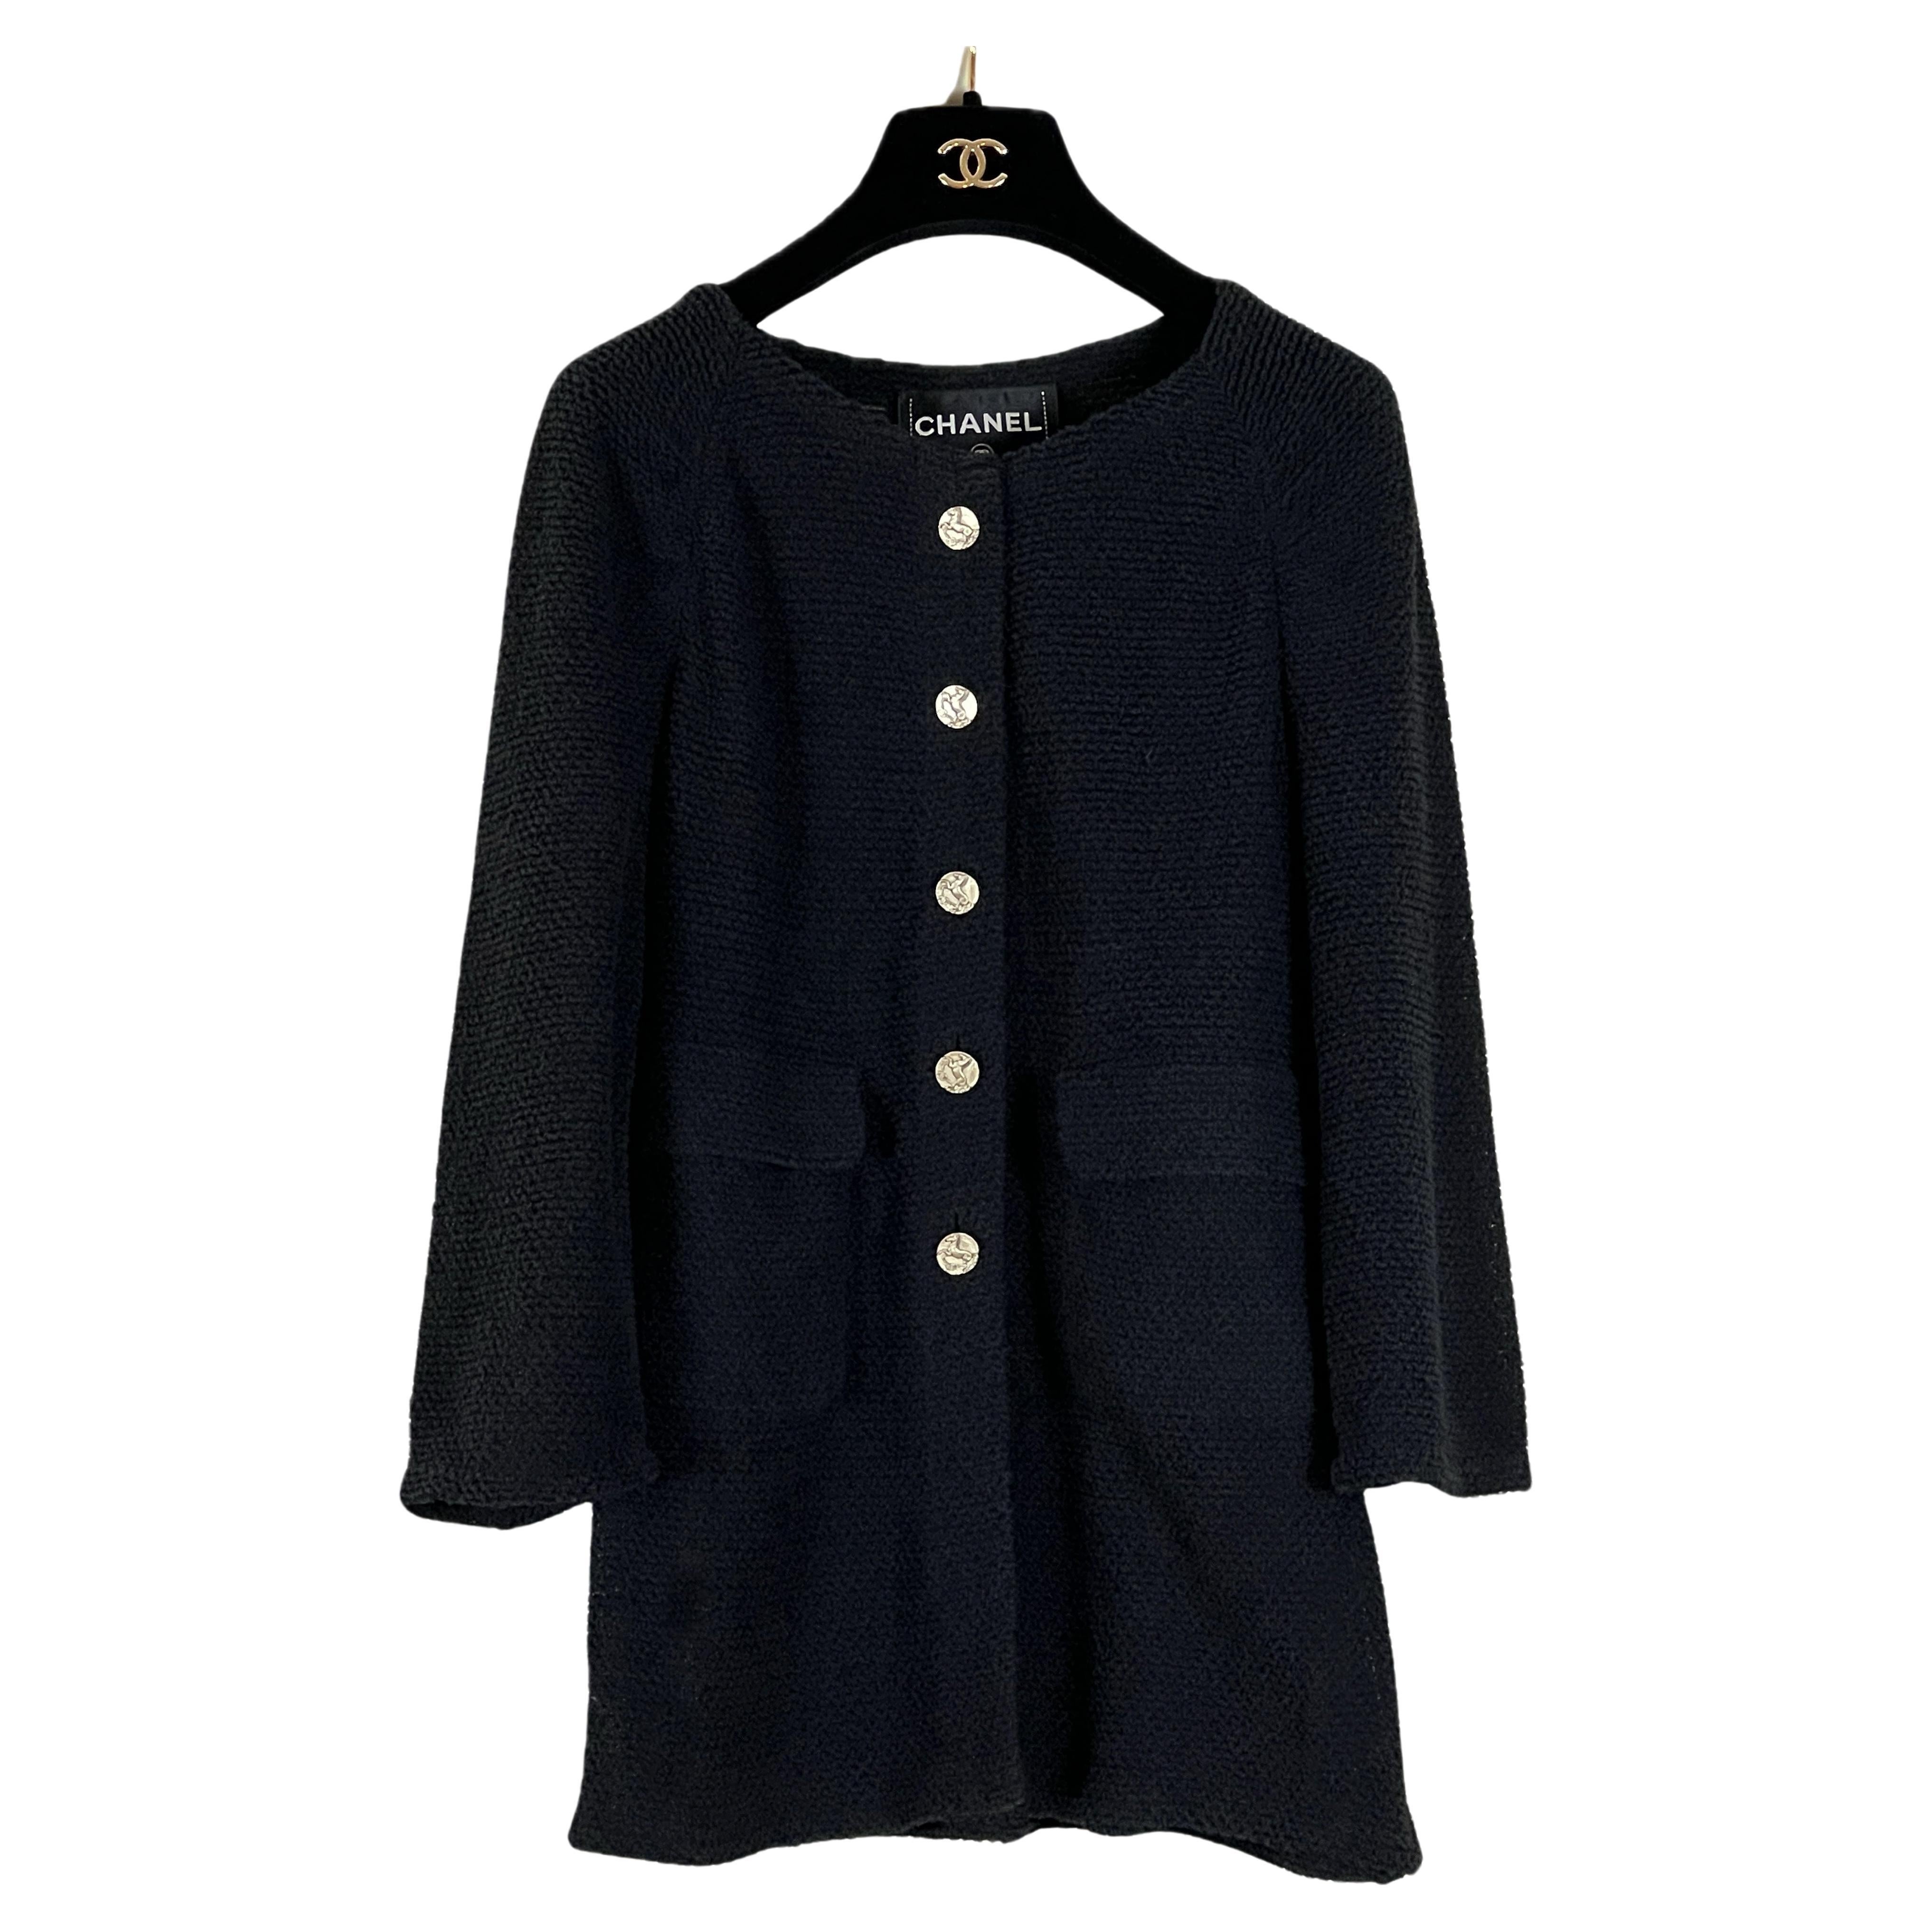 Chanel New Paris / Greece Black Tweed Jacket For Sale